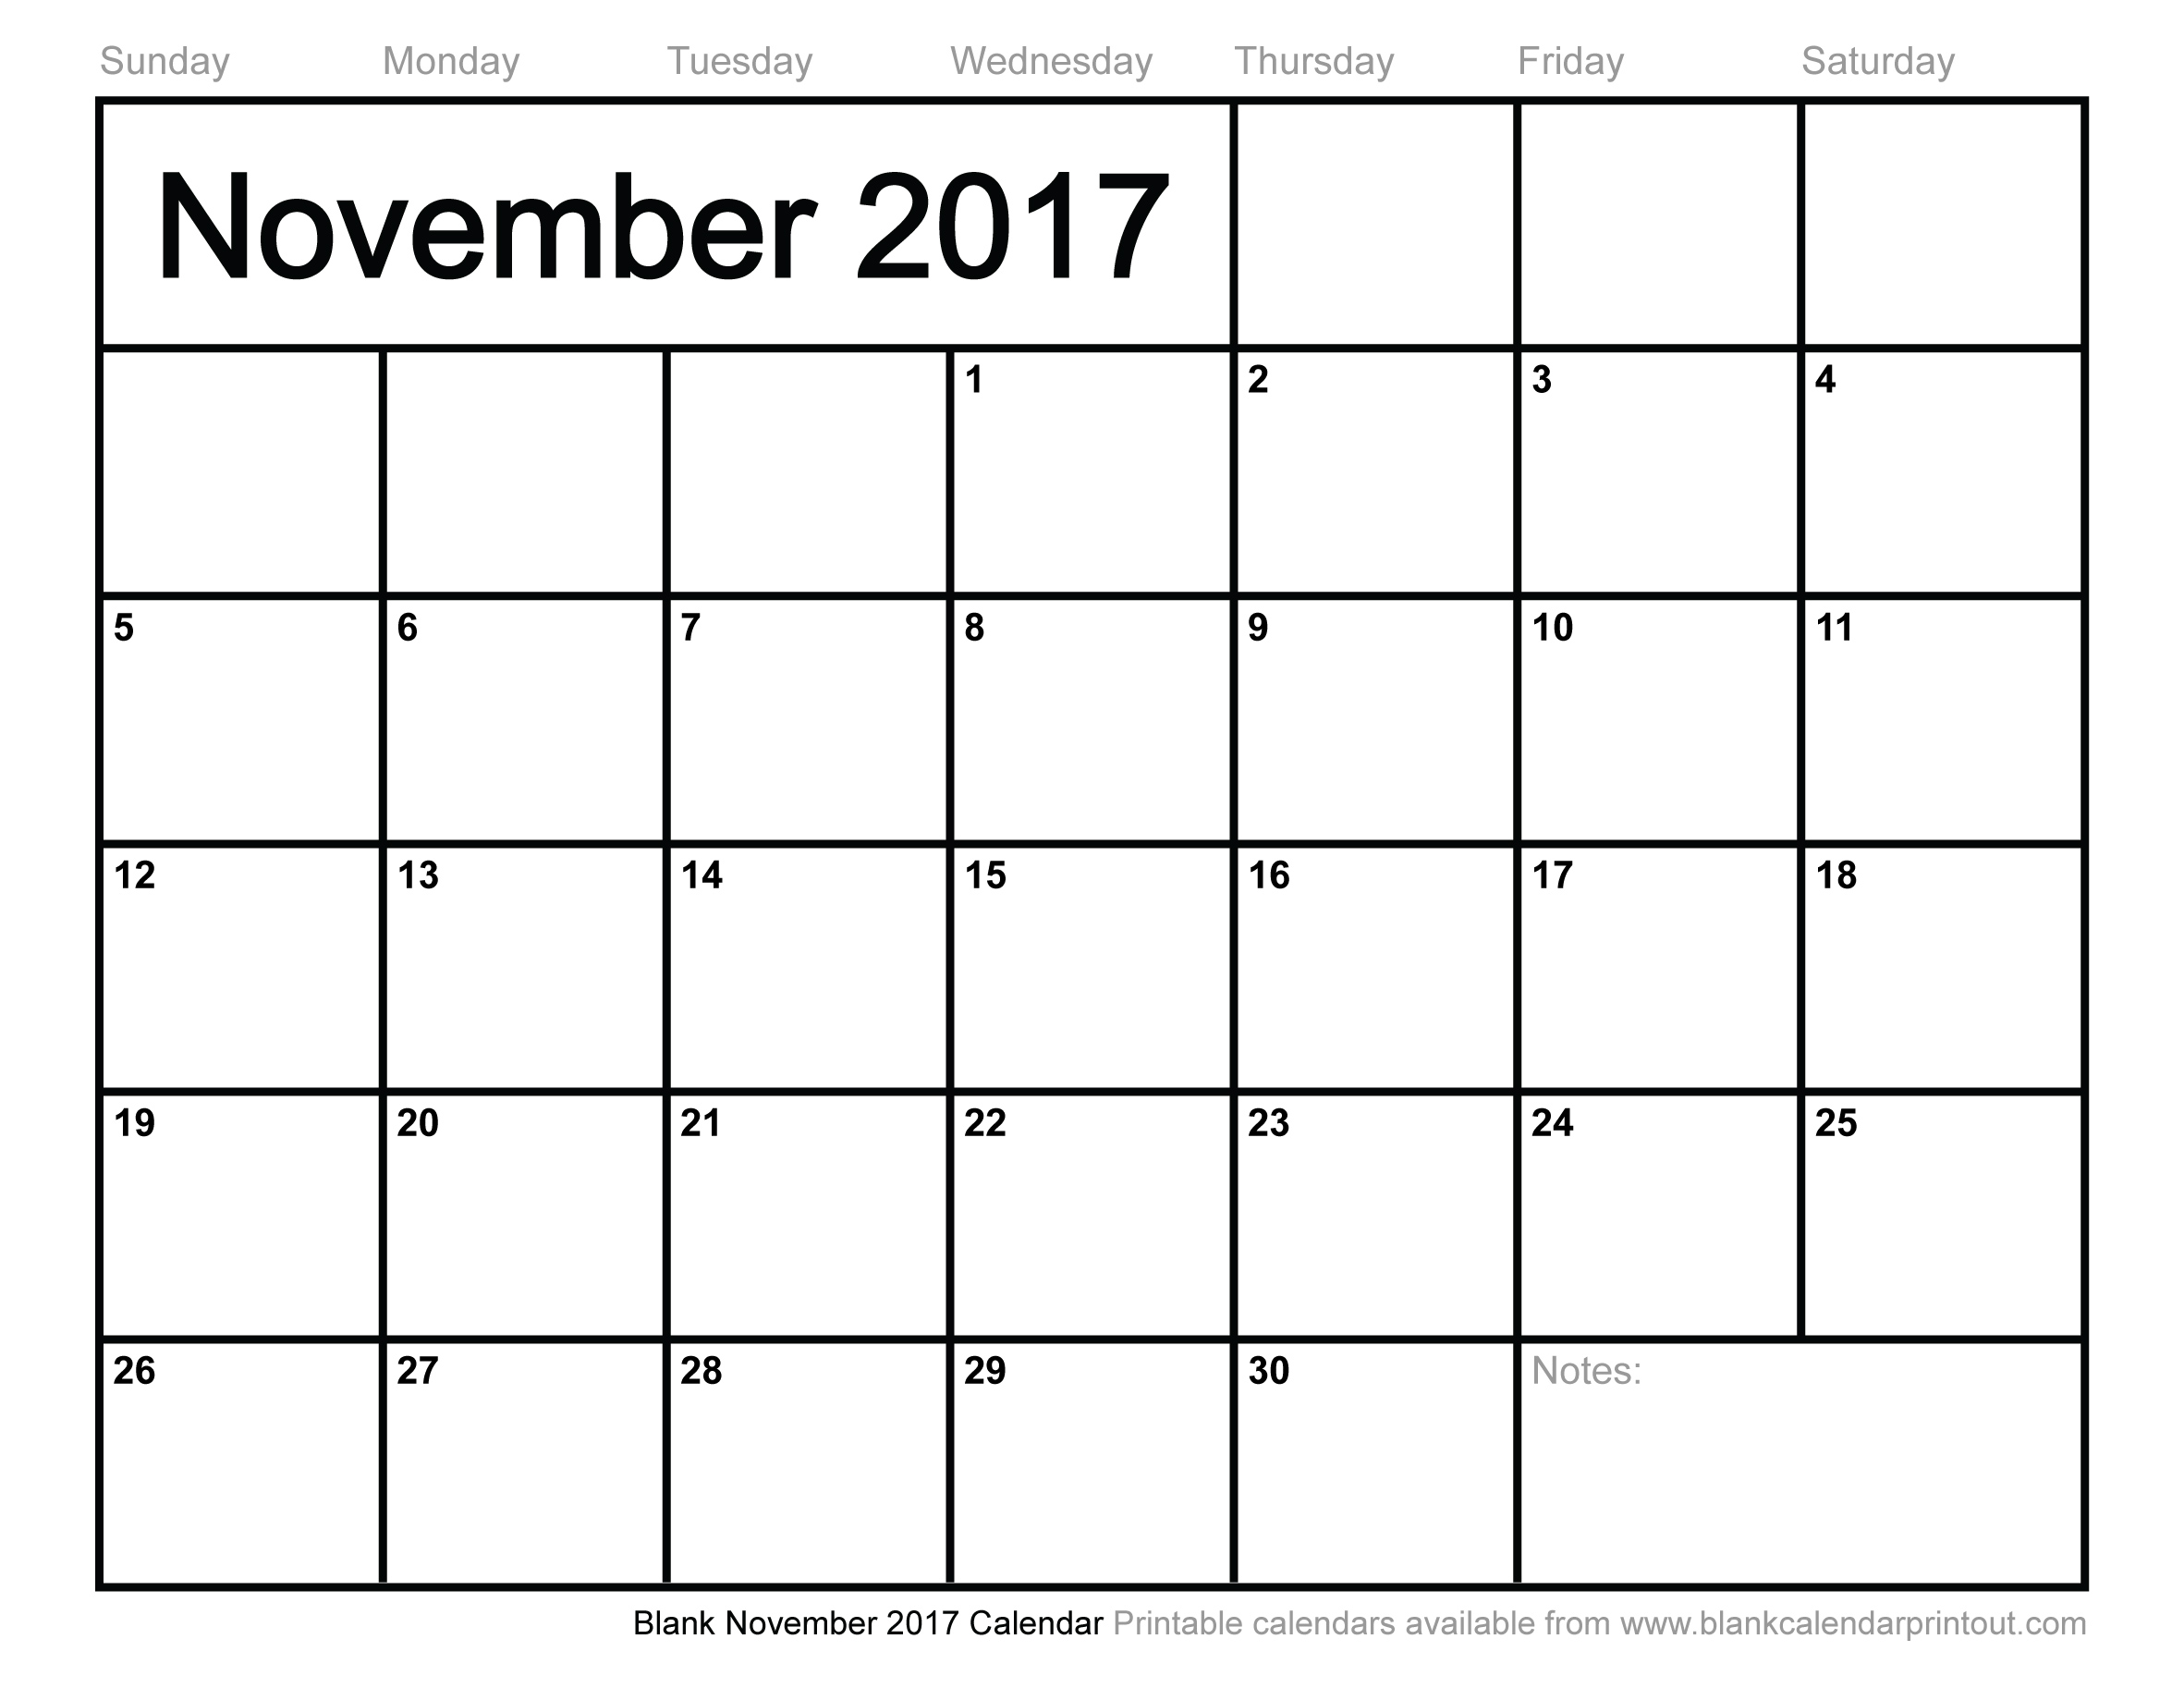 Blank November 2017 Calendar to Print